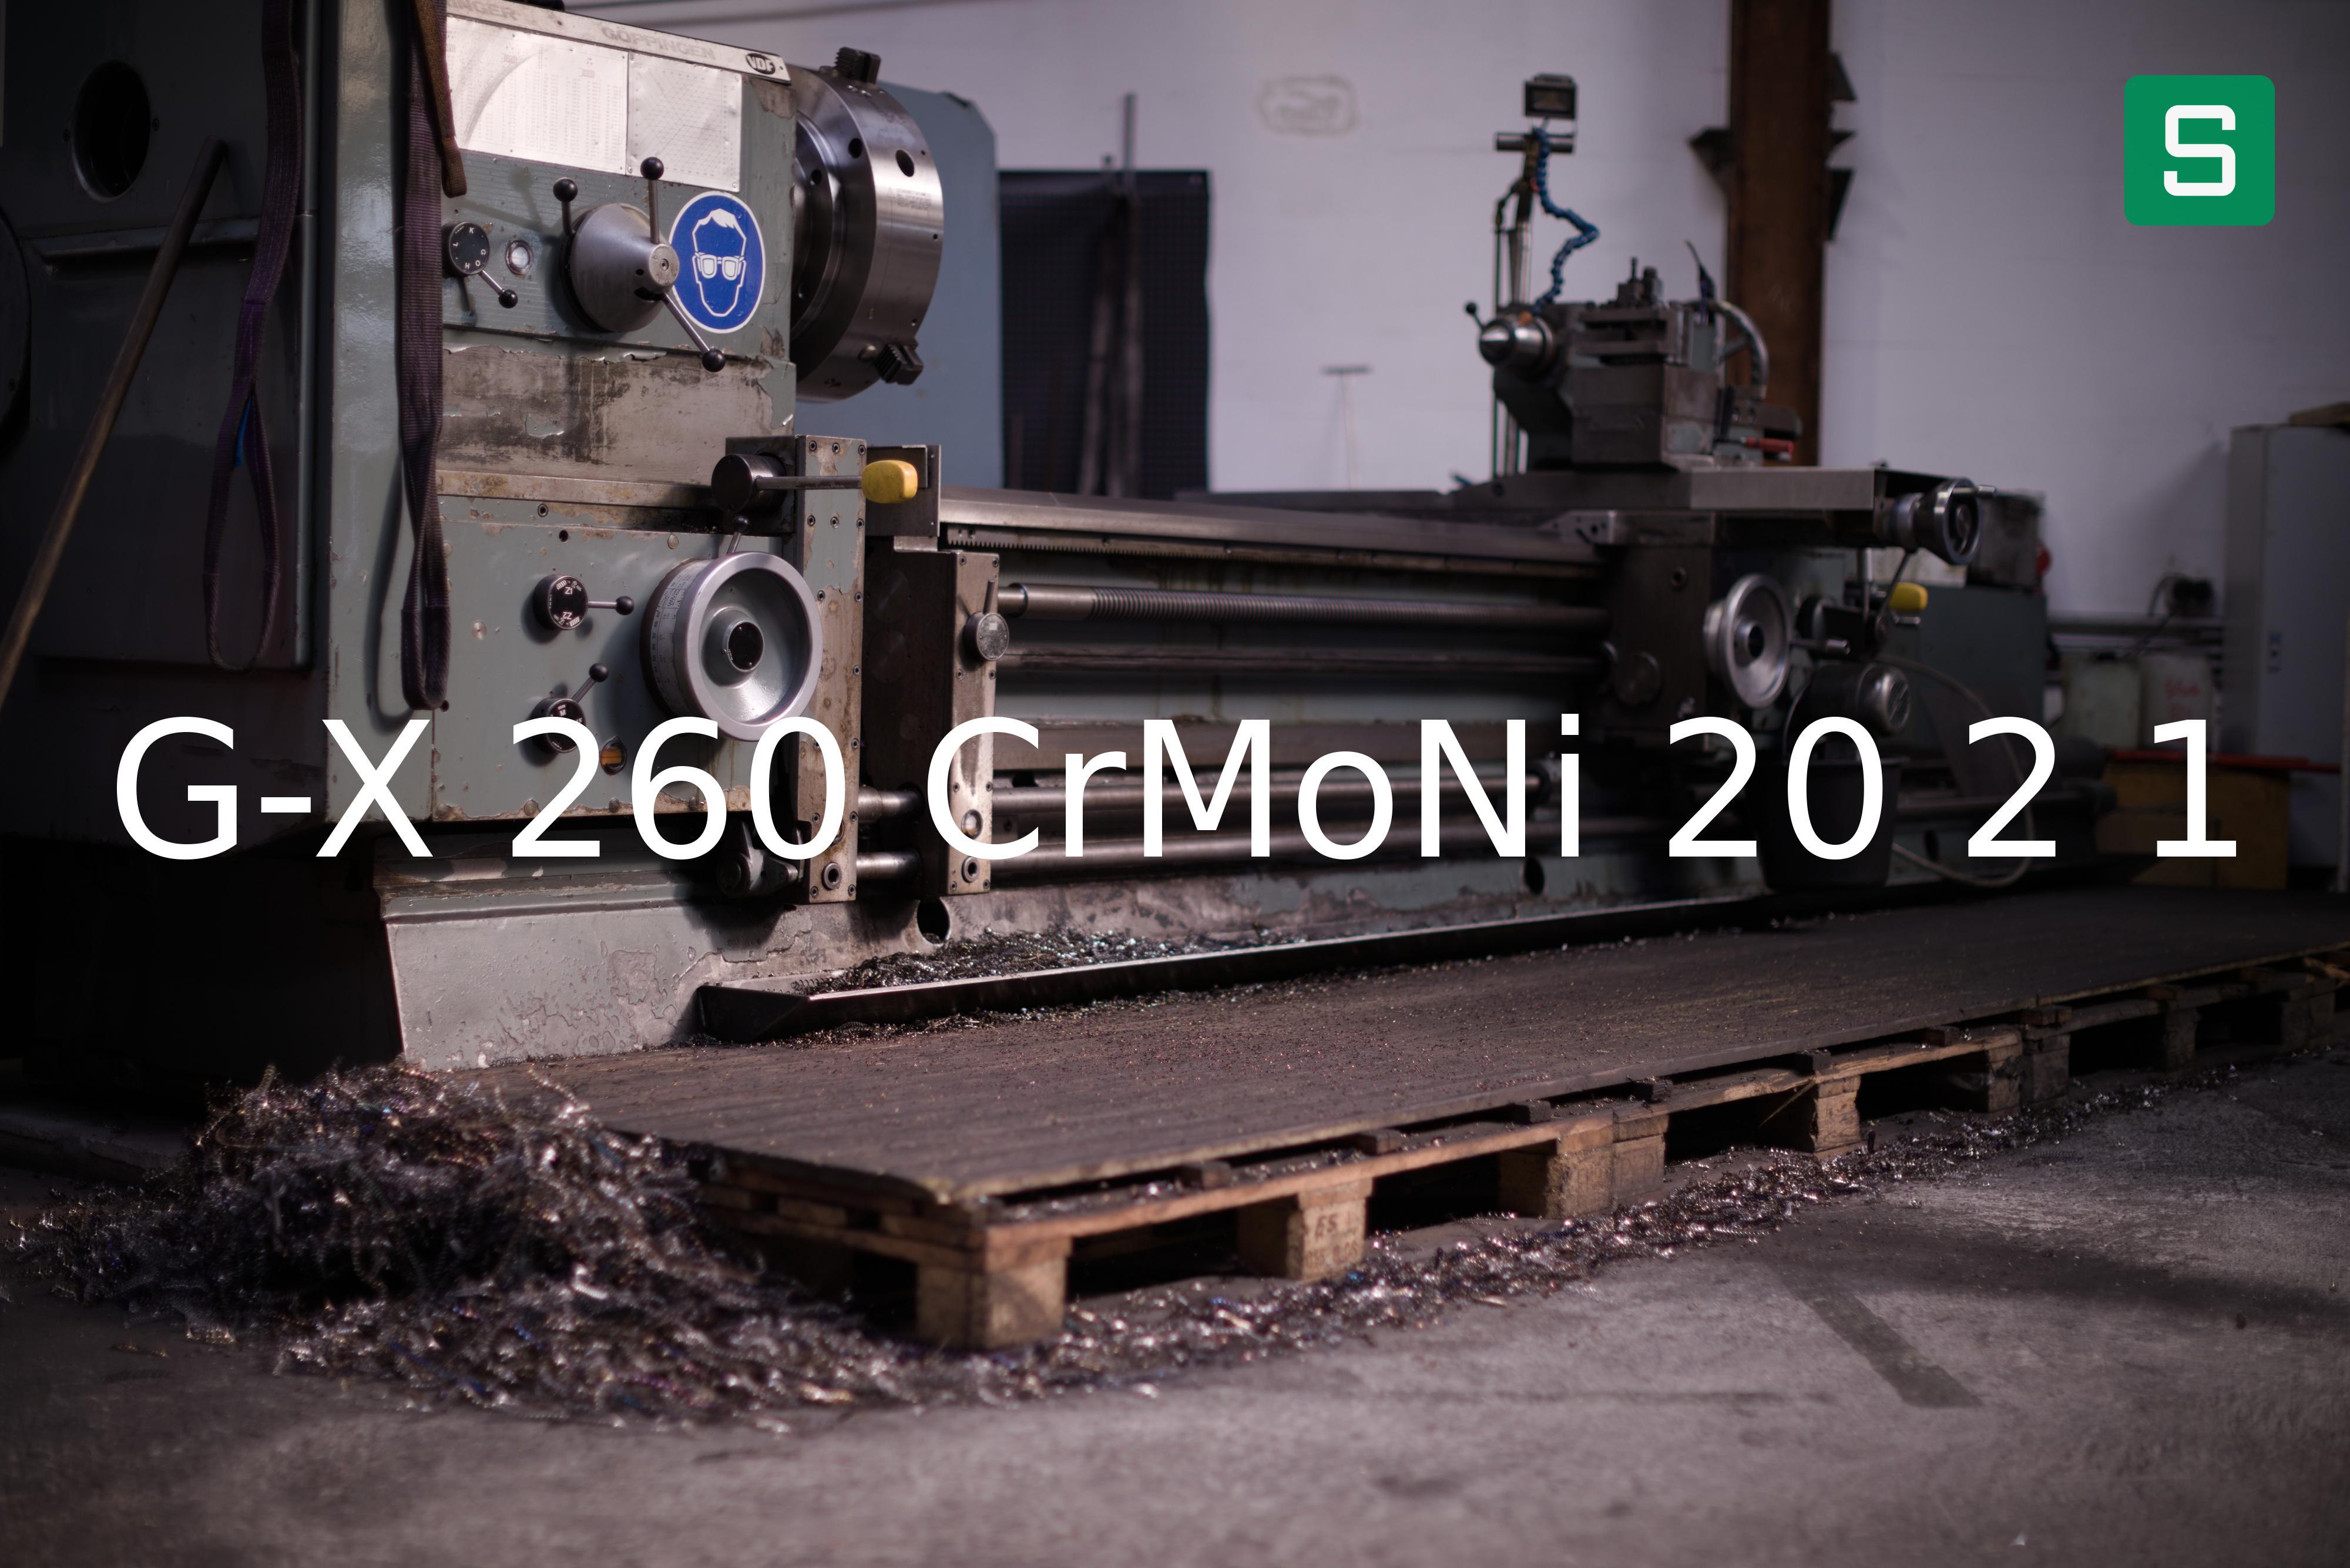 Steel Material: G-X 260 CrMoNi 20 2 1